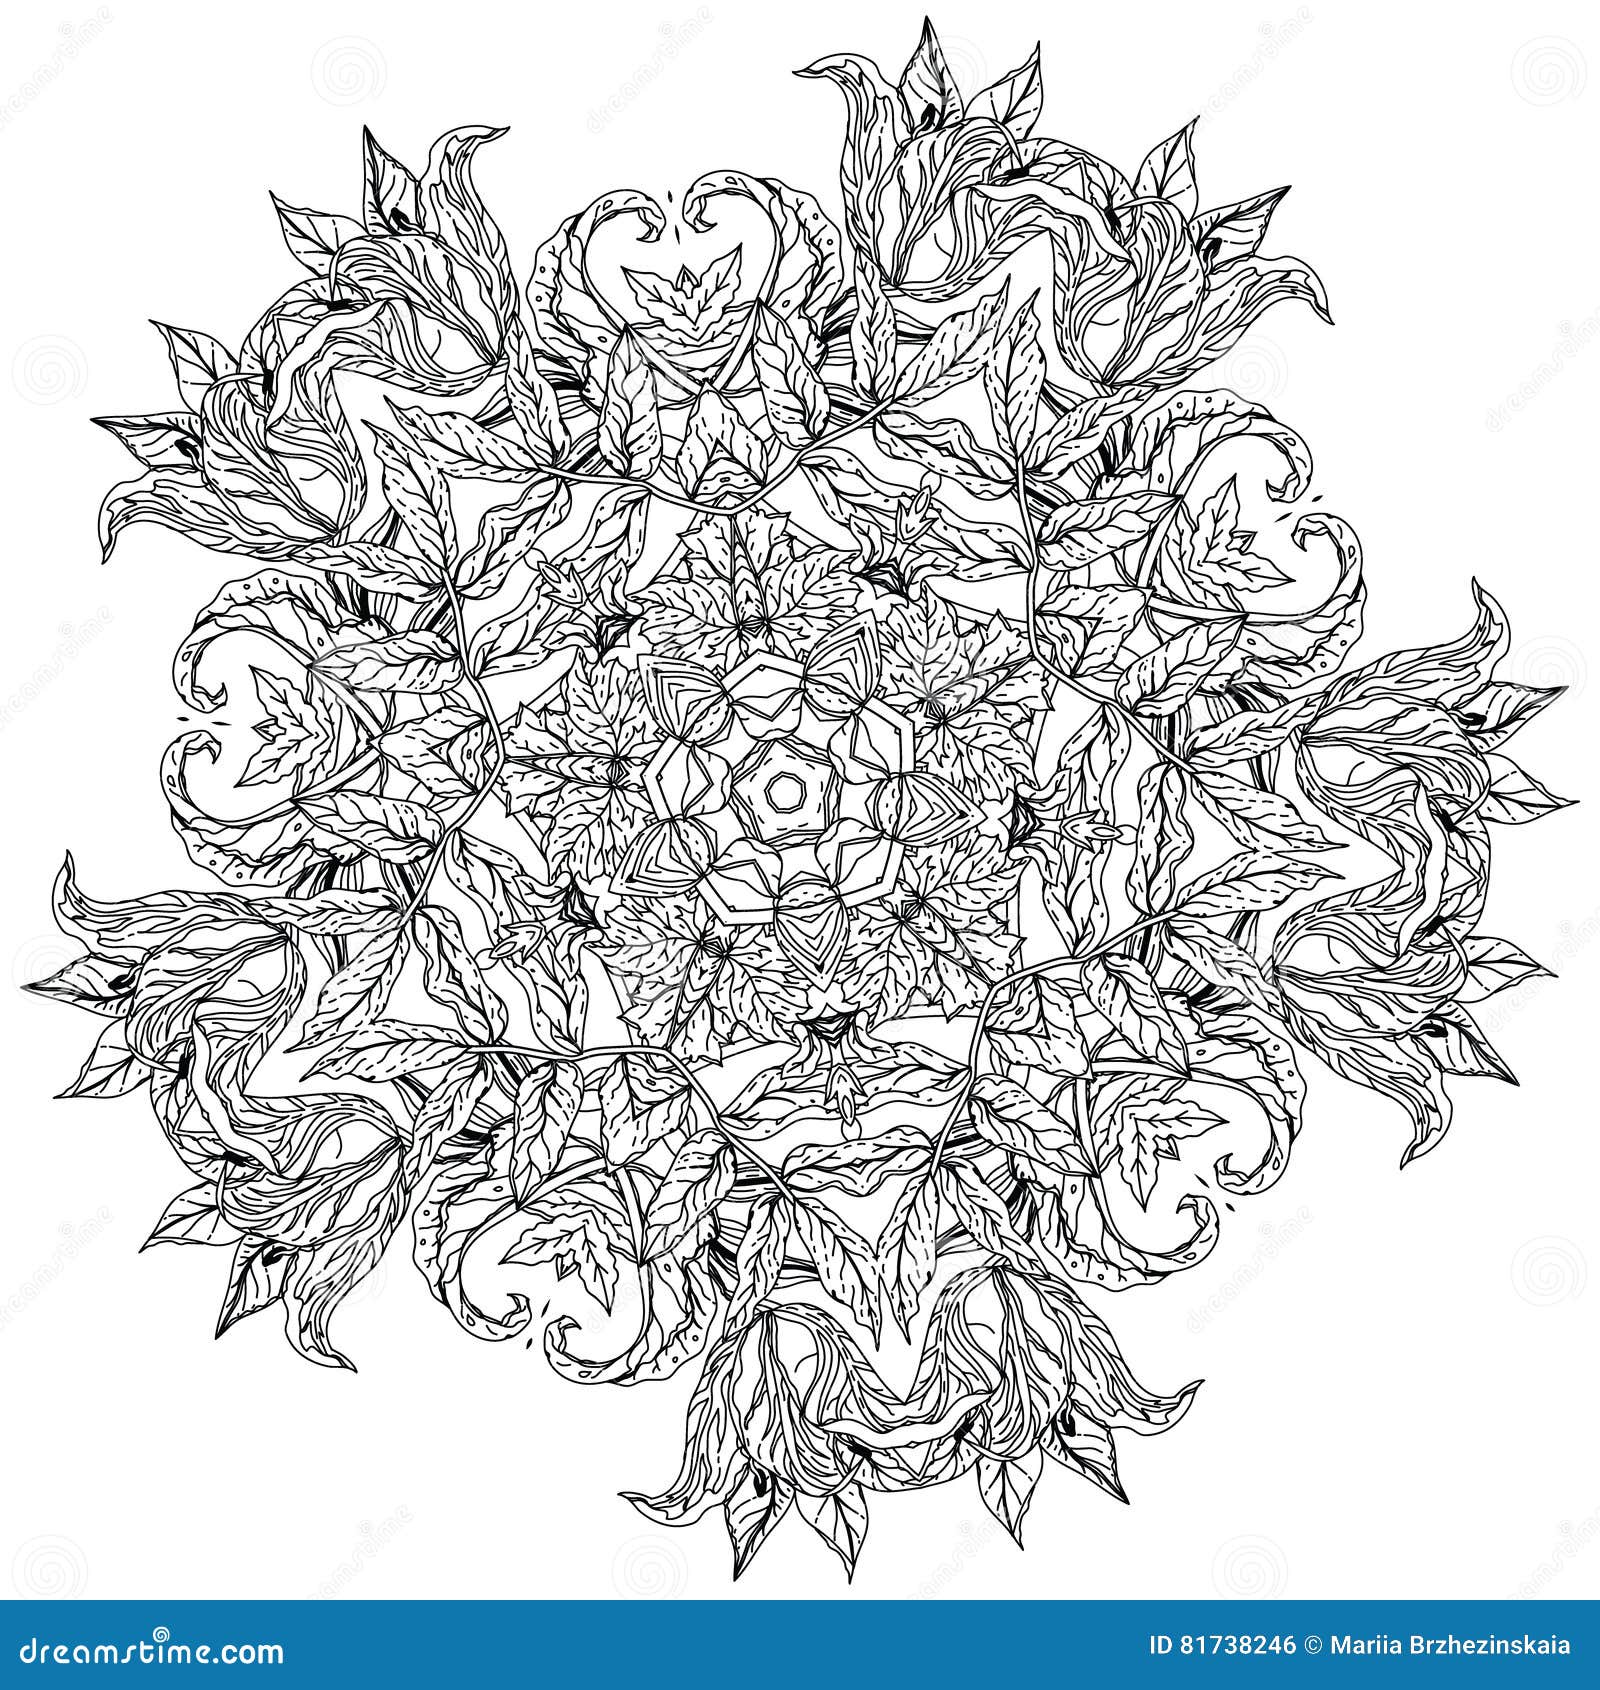 Contoured Mandala Shape Flowers for Adult Coloring Book in Zen Art